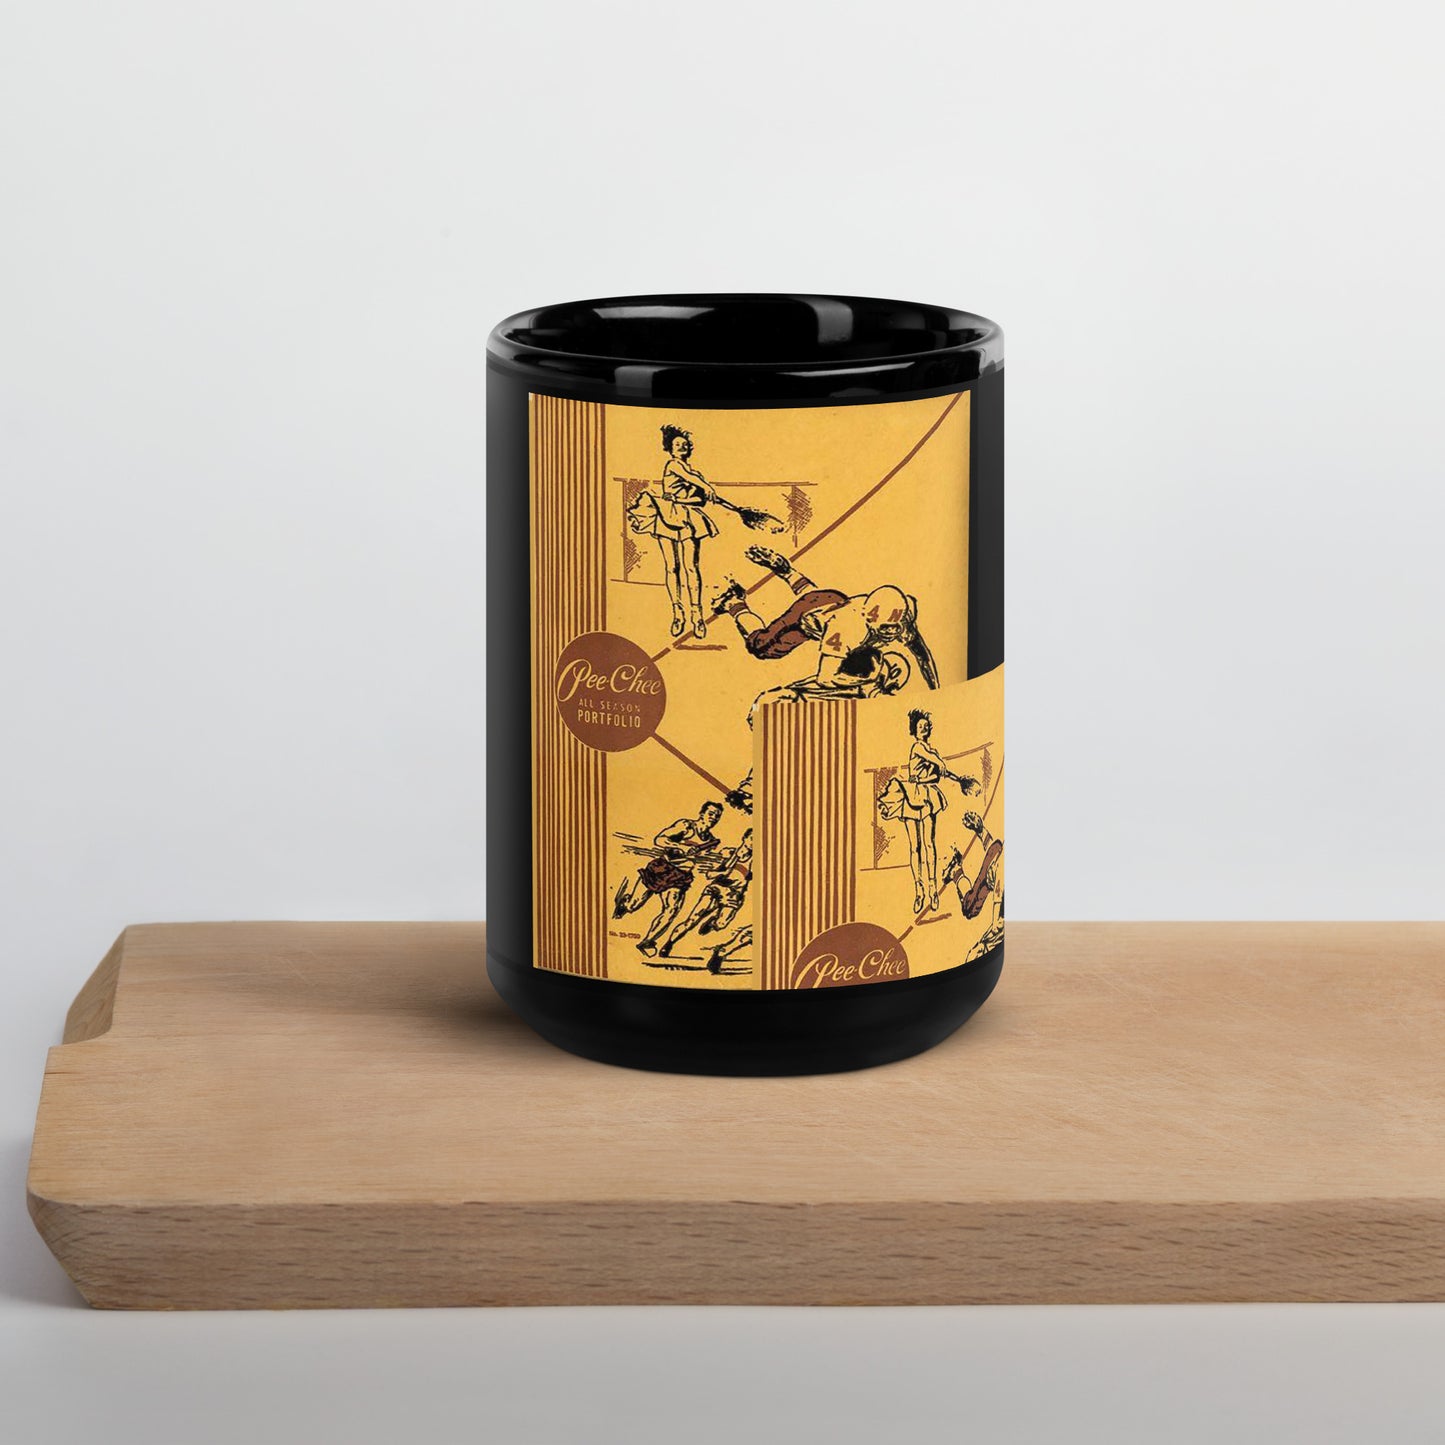 Snooty Fox Art Glossy Mug - Pee-Chee Pattern